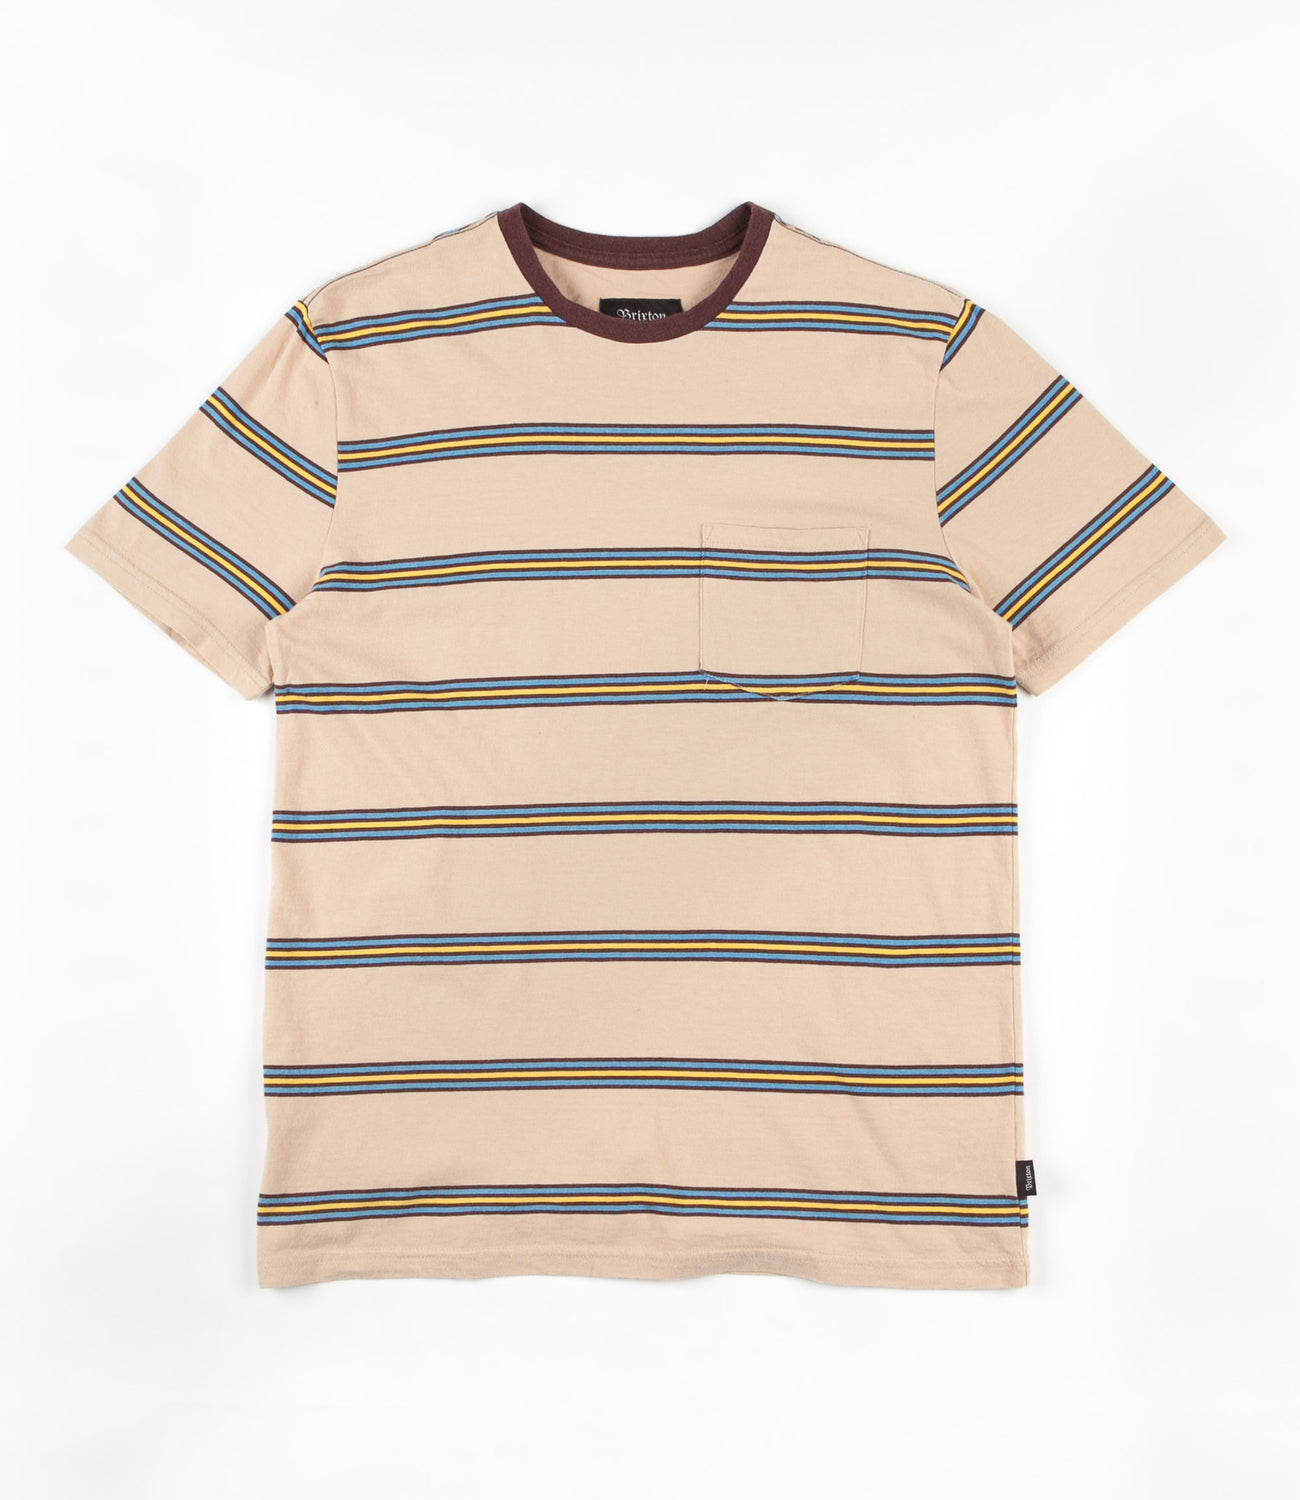 Brixton Hilt Washed Pocket T-Shirt - Sand | Flatspot